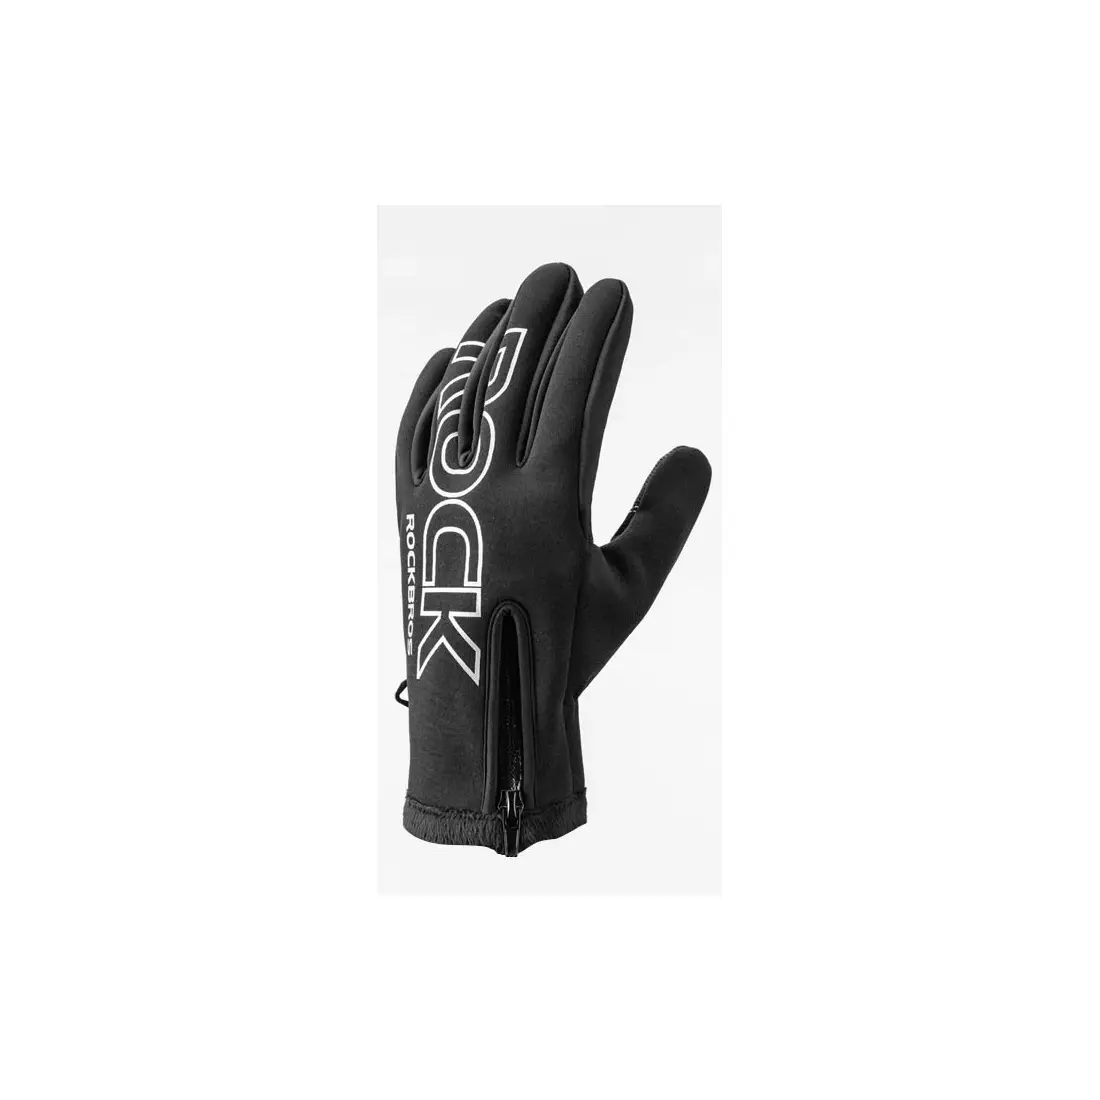 Rockbros winter cycling gloves softshell black S091-4BK